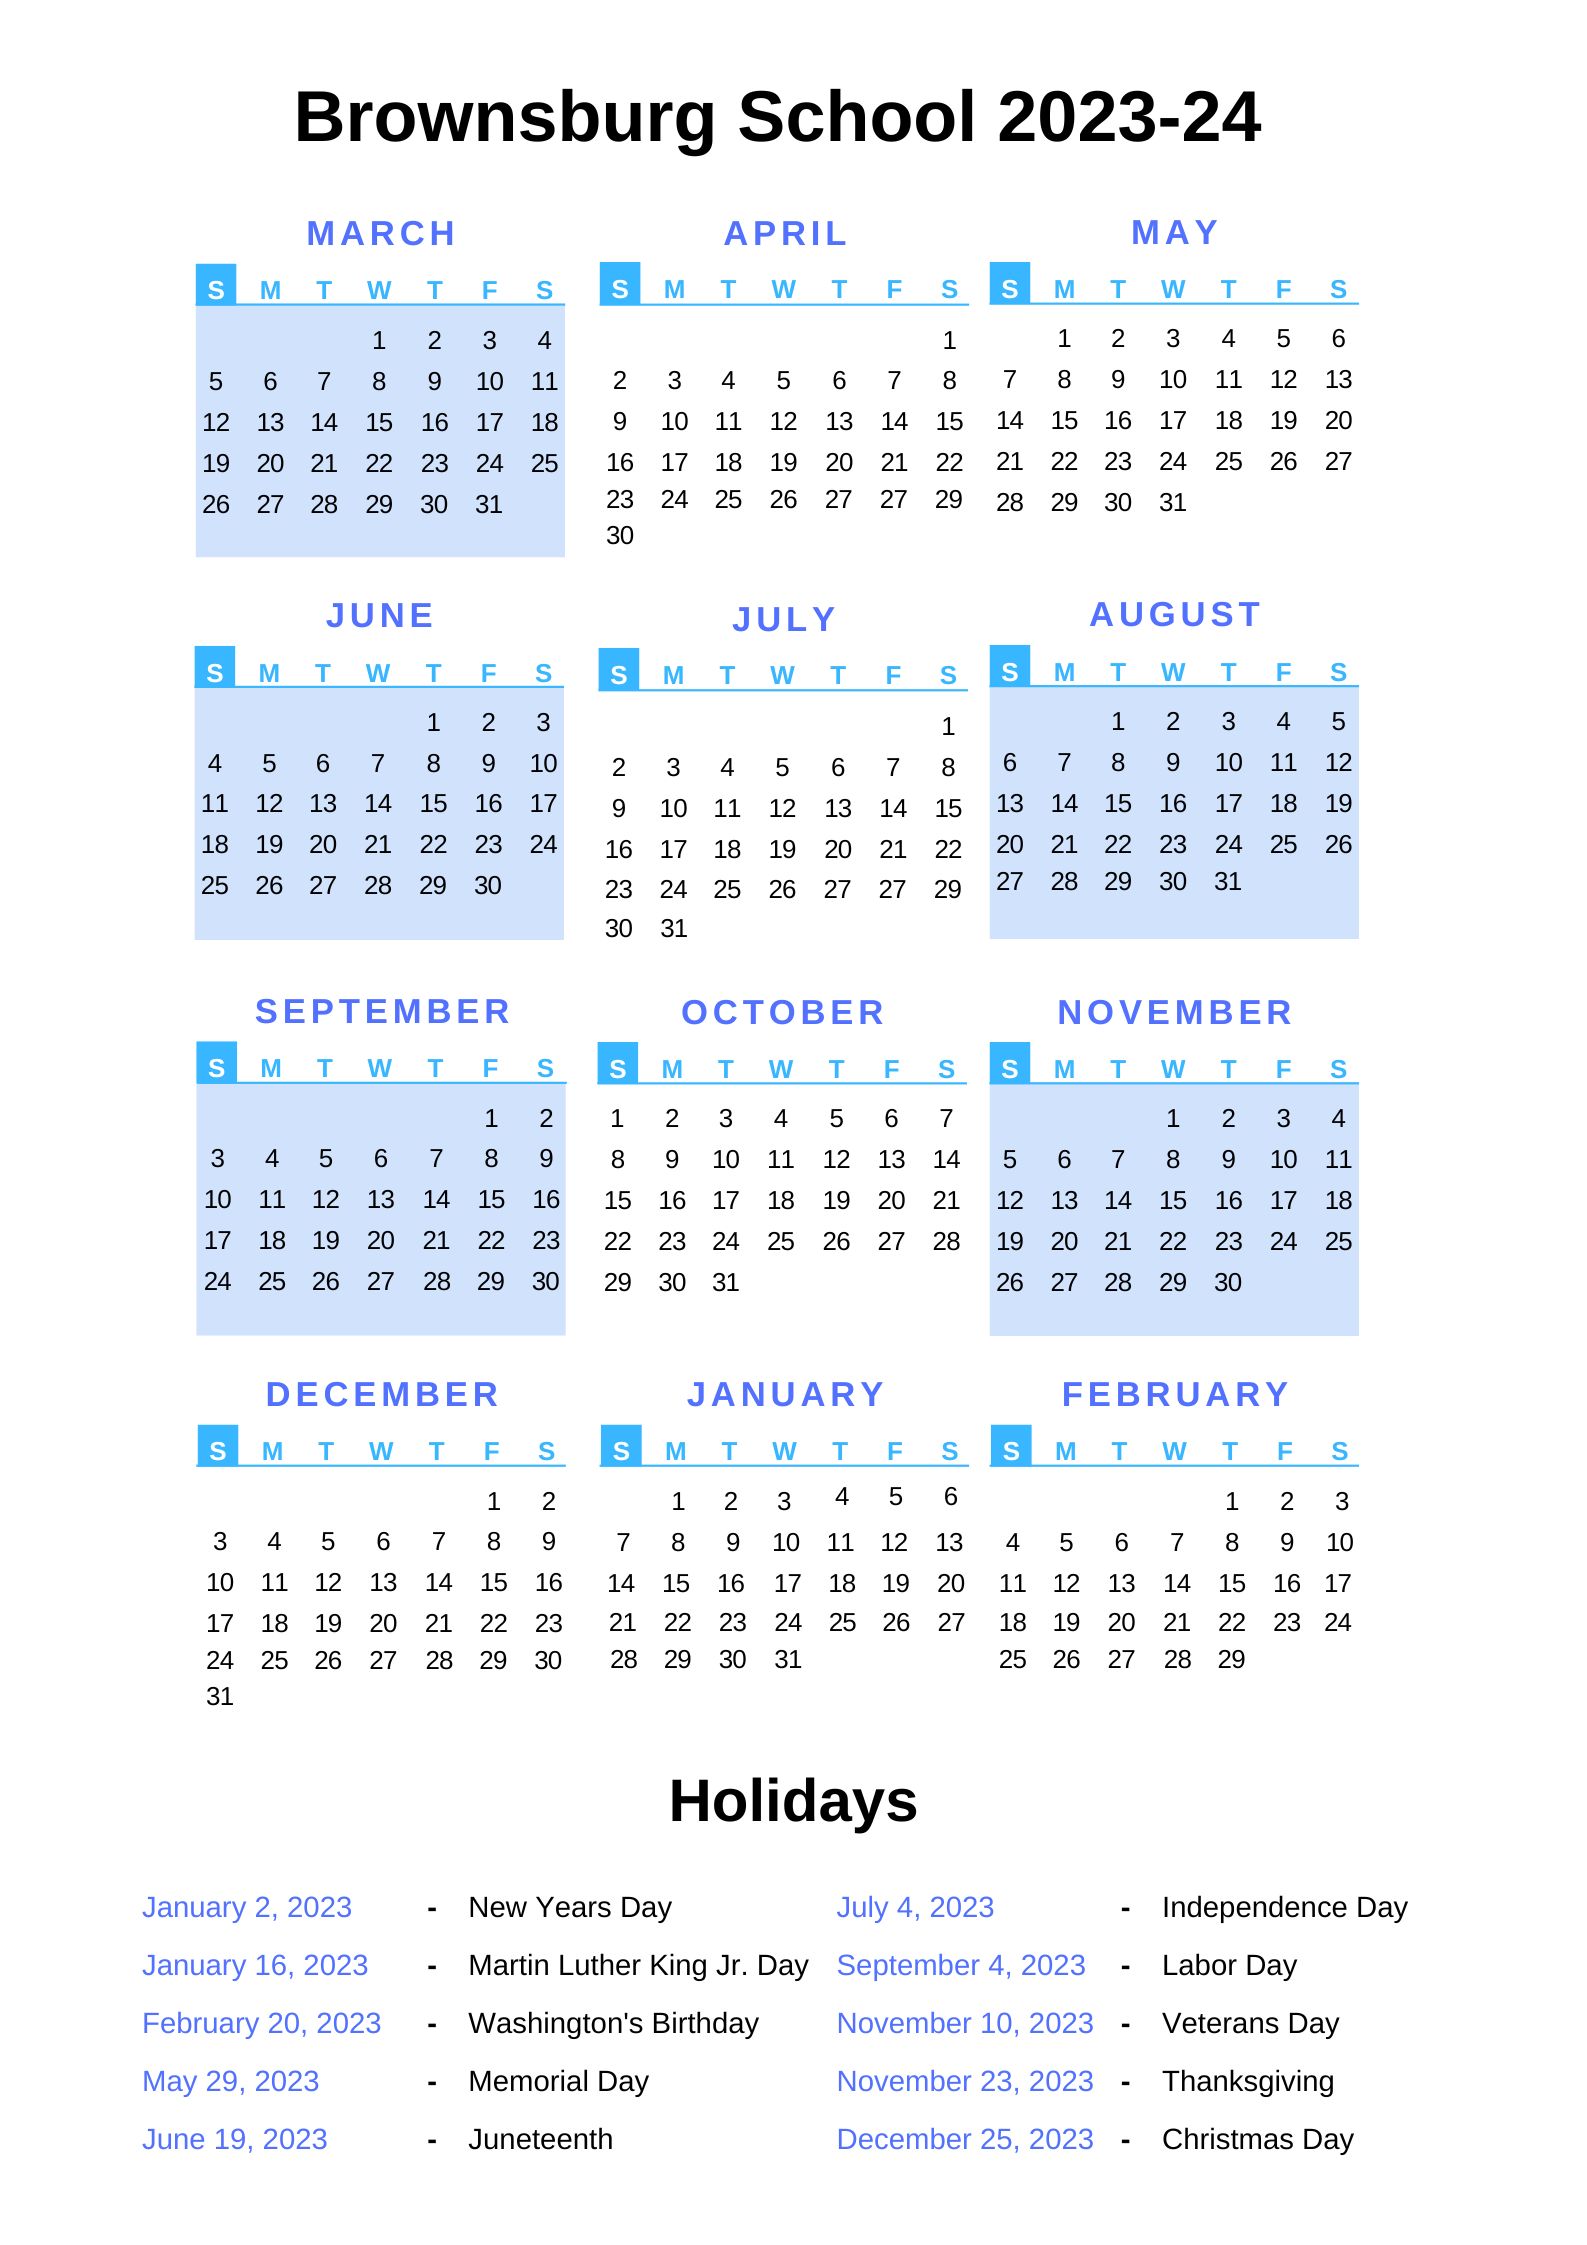 Brownsburg Schools Calendar 2023 24 with holidays